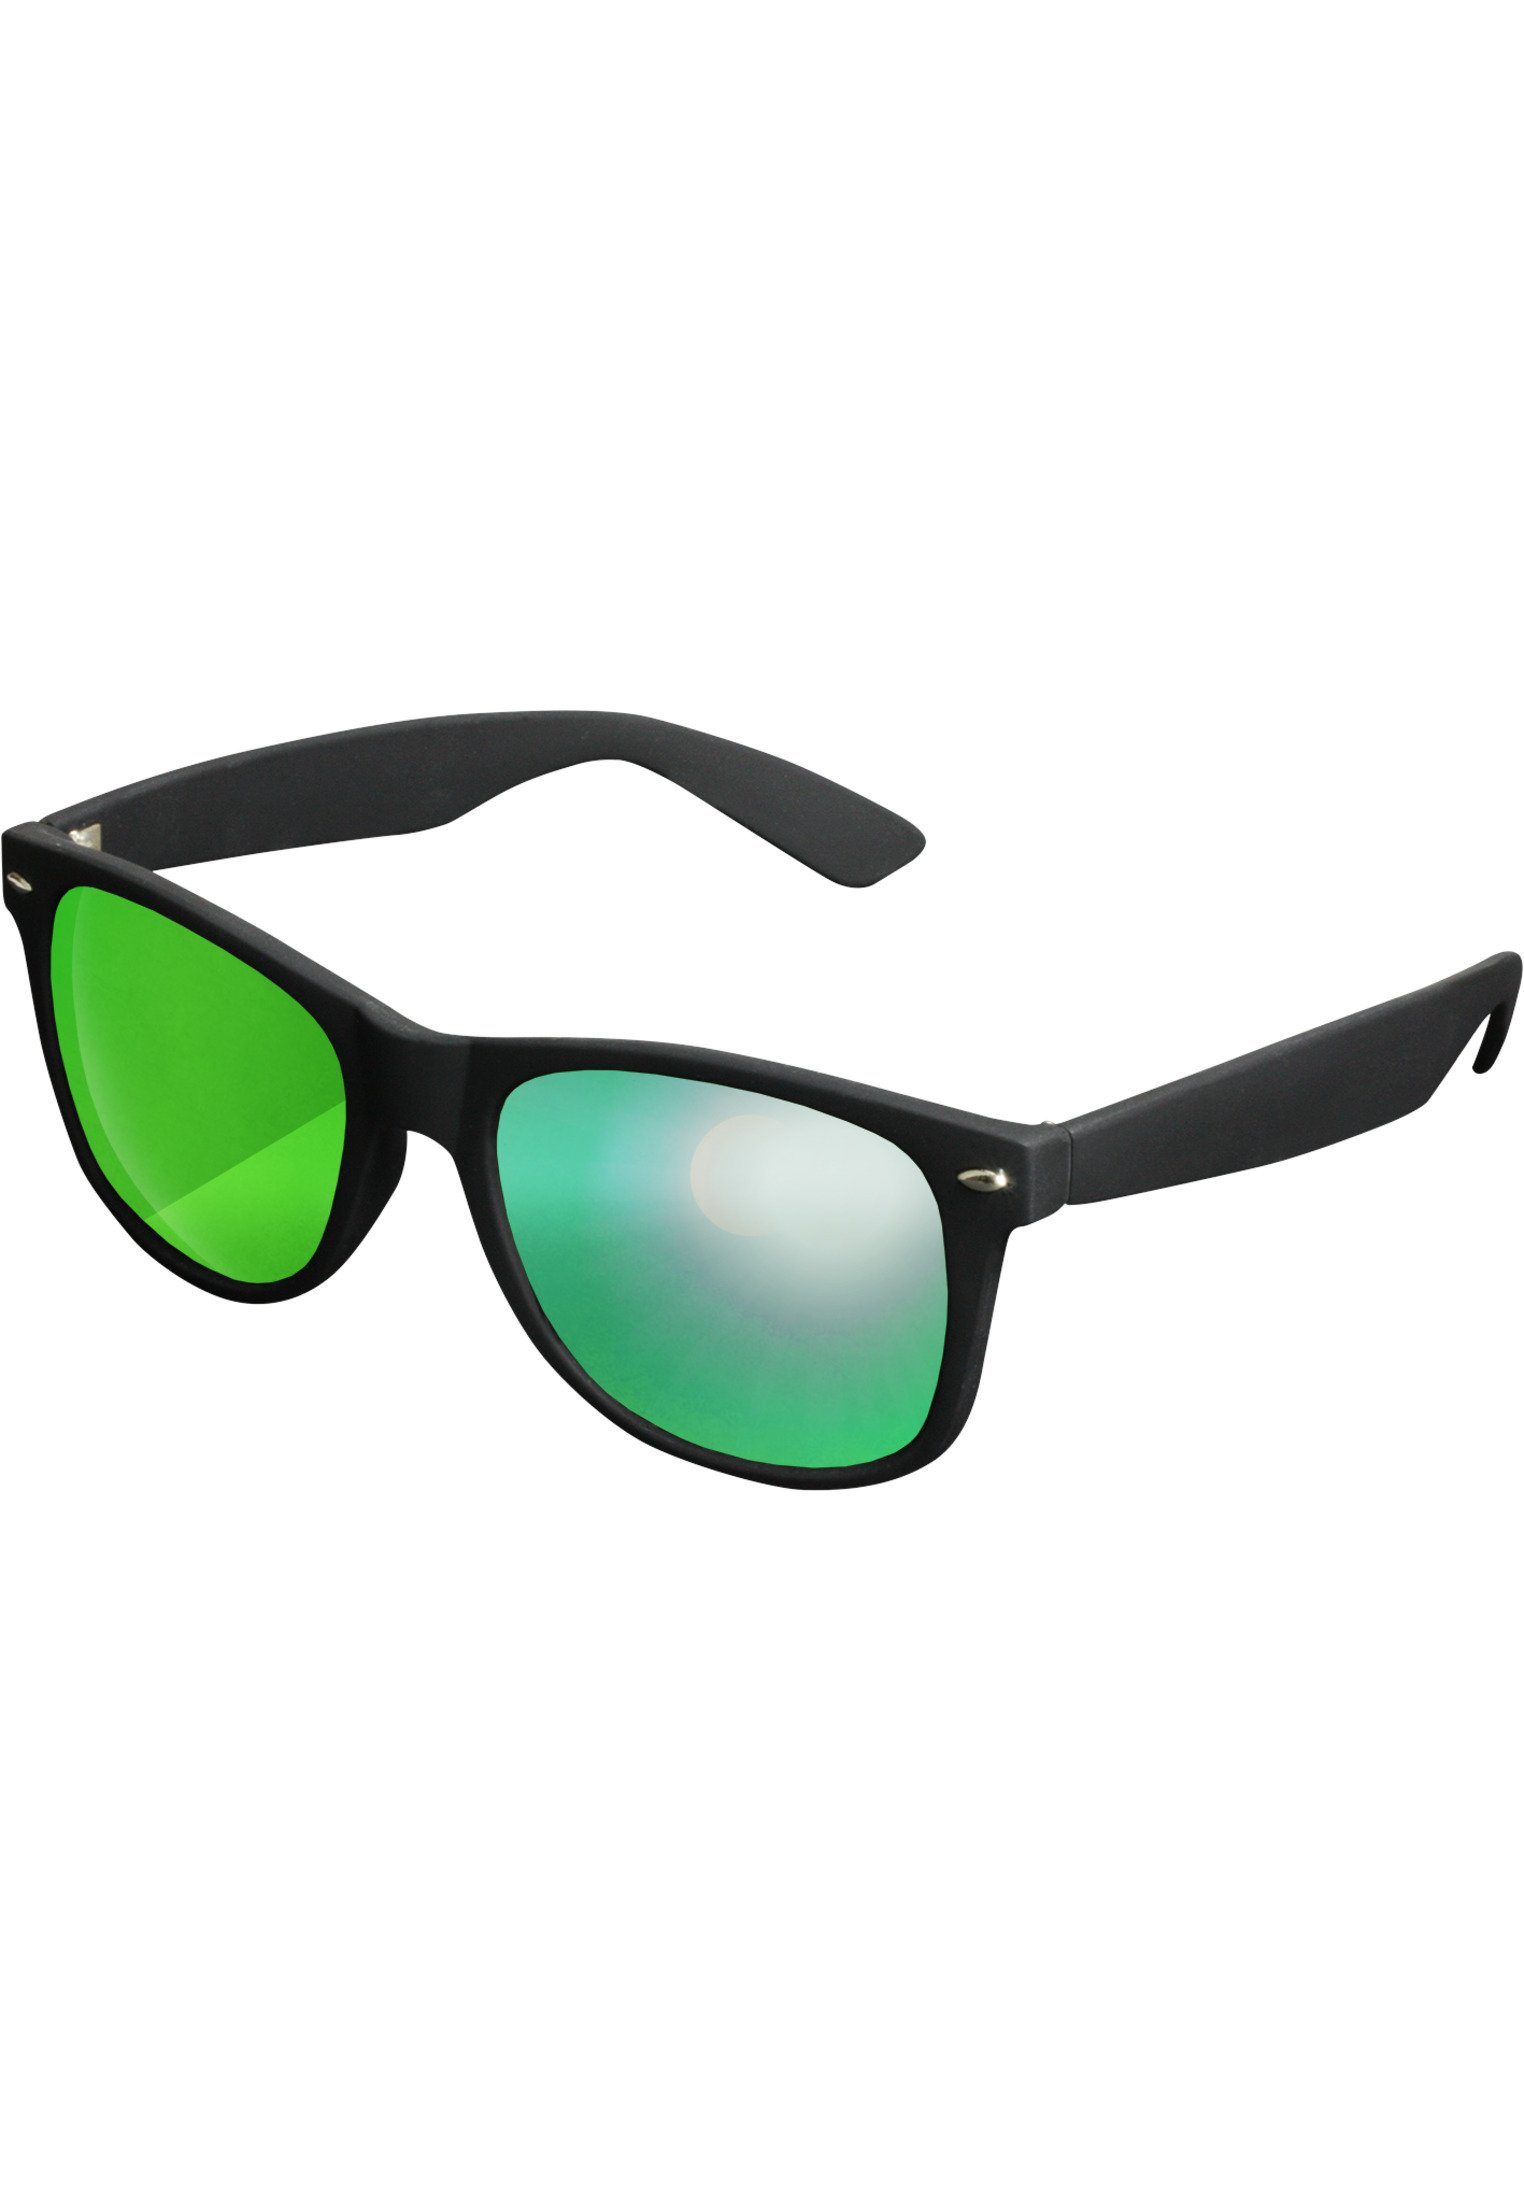 Accessoires Sunglasses Likoma Sonnenbrille MSTRDS blk/grn Mirror